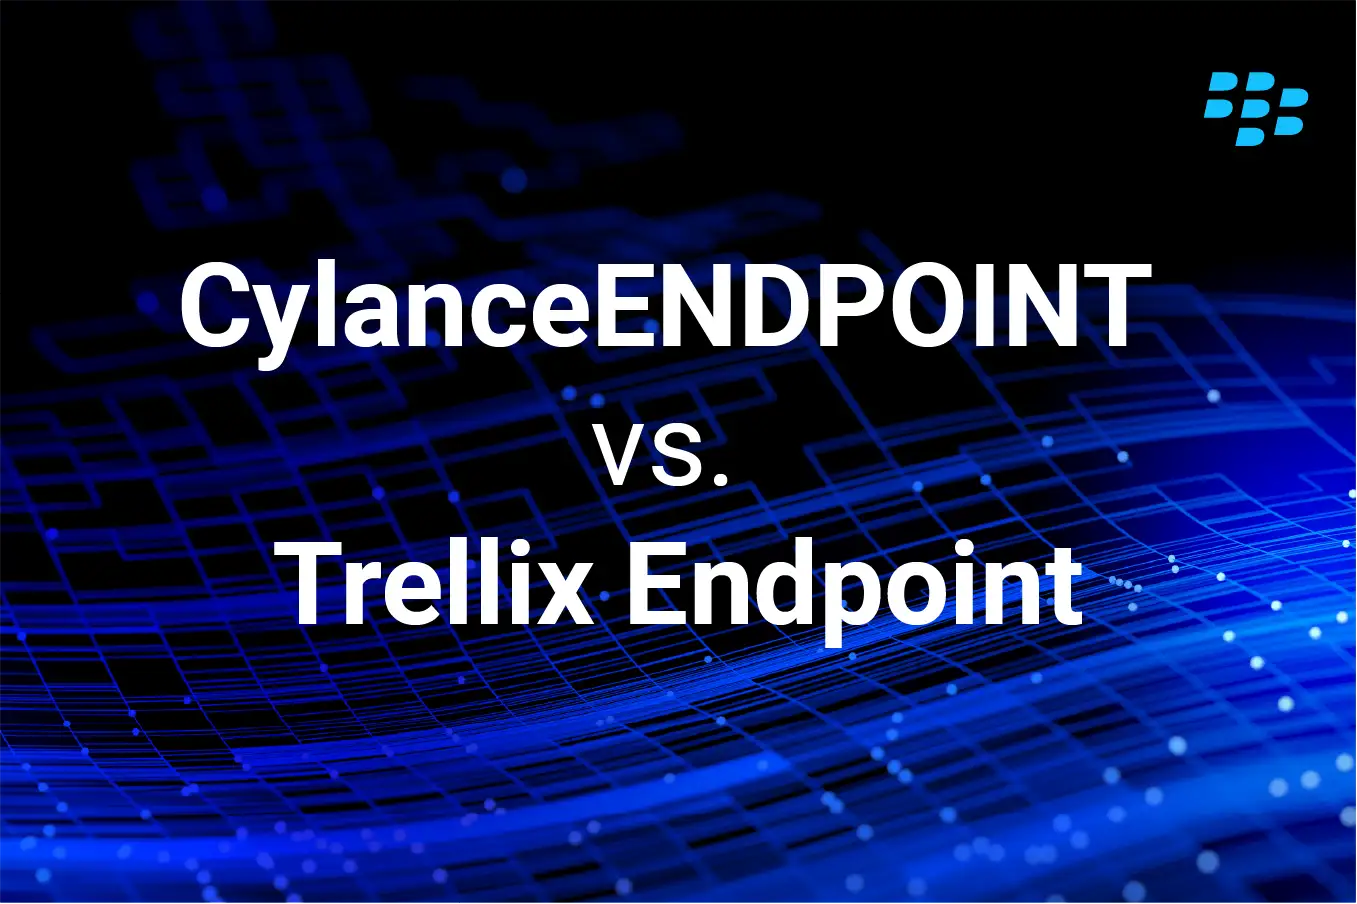 CylanceENDPOINT vs. Trellix Endpoint